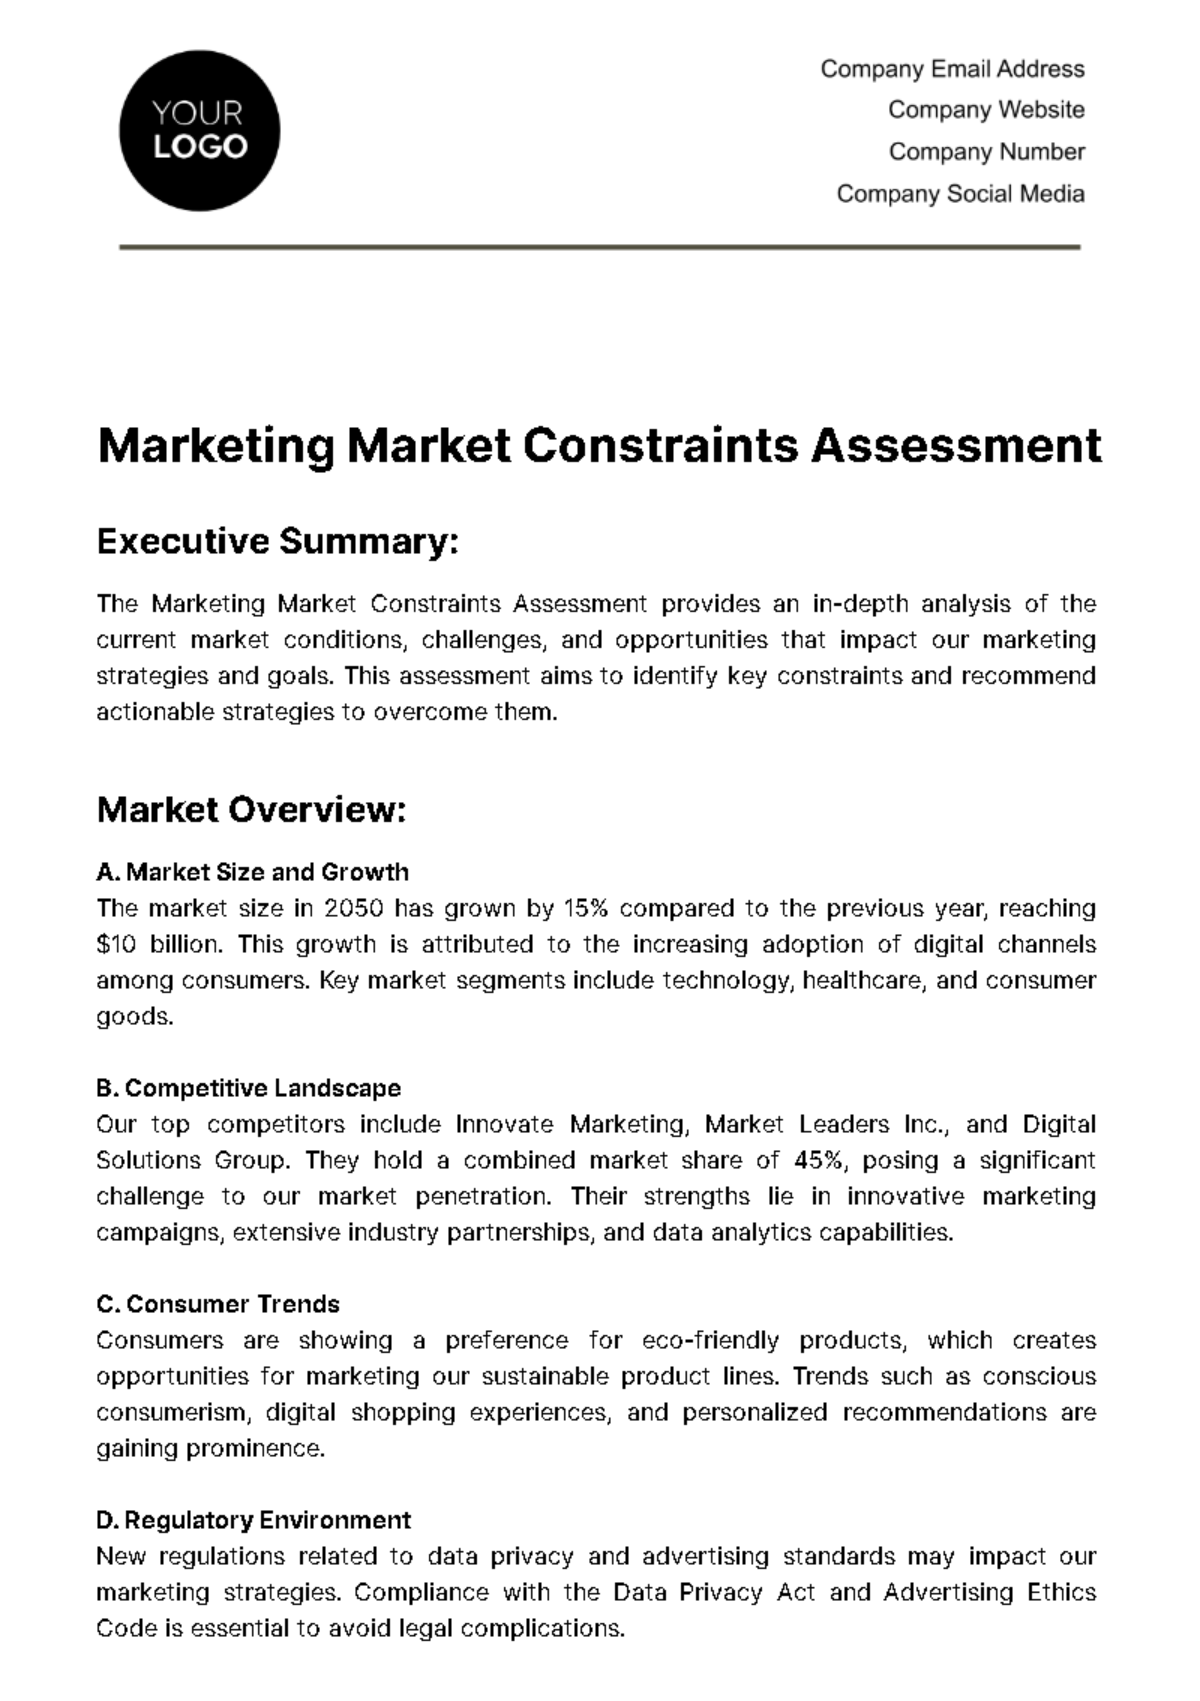 Marketing Market Constraints Assessment Template